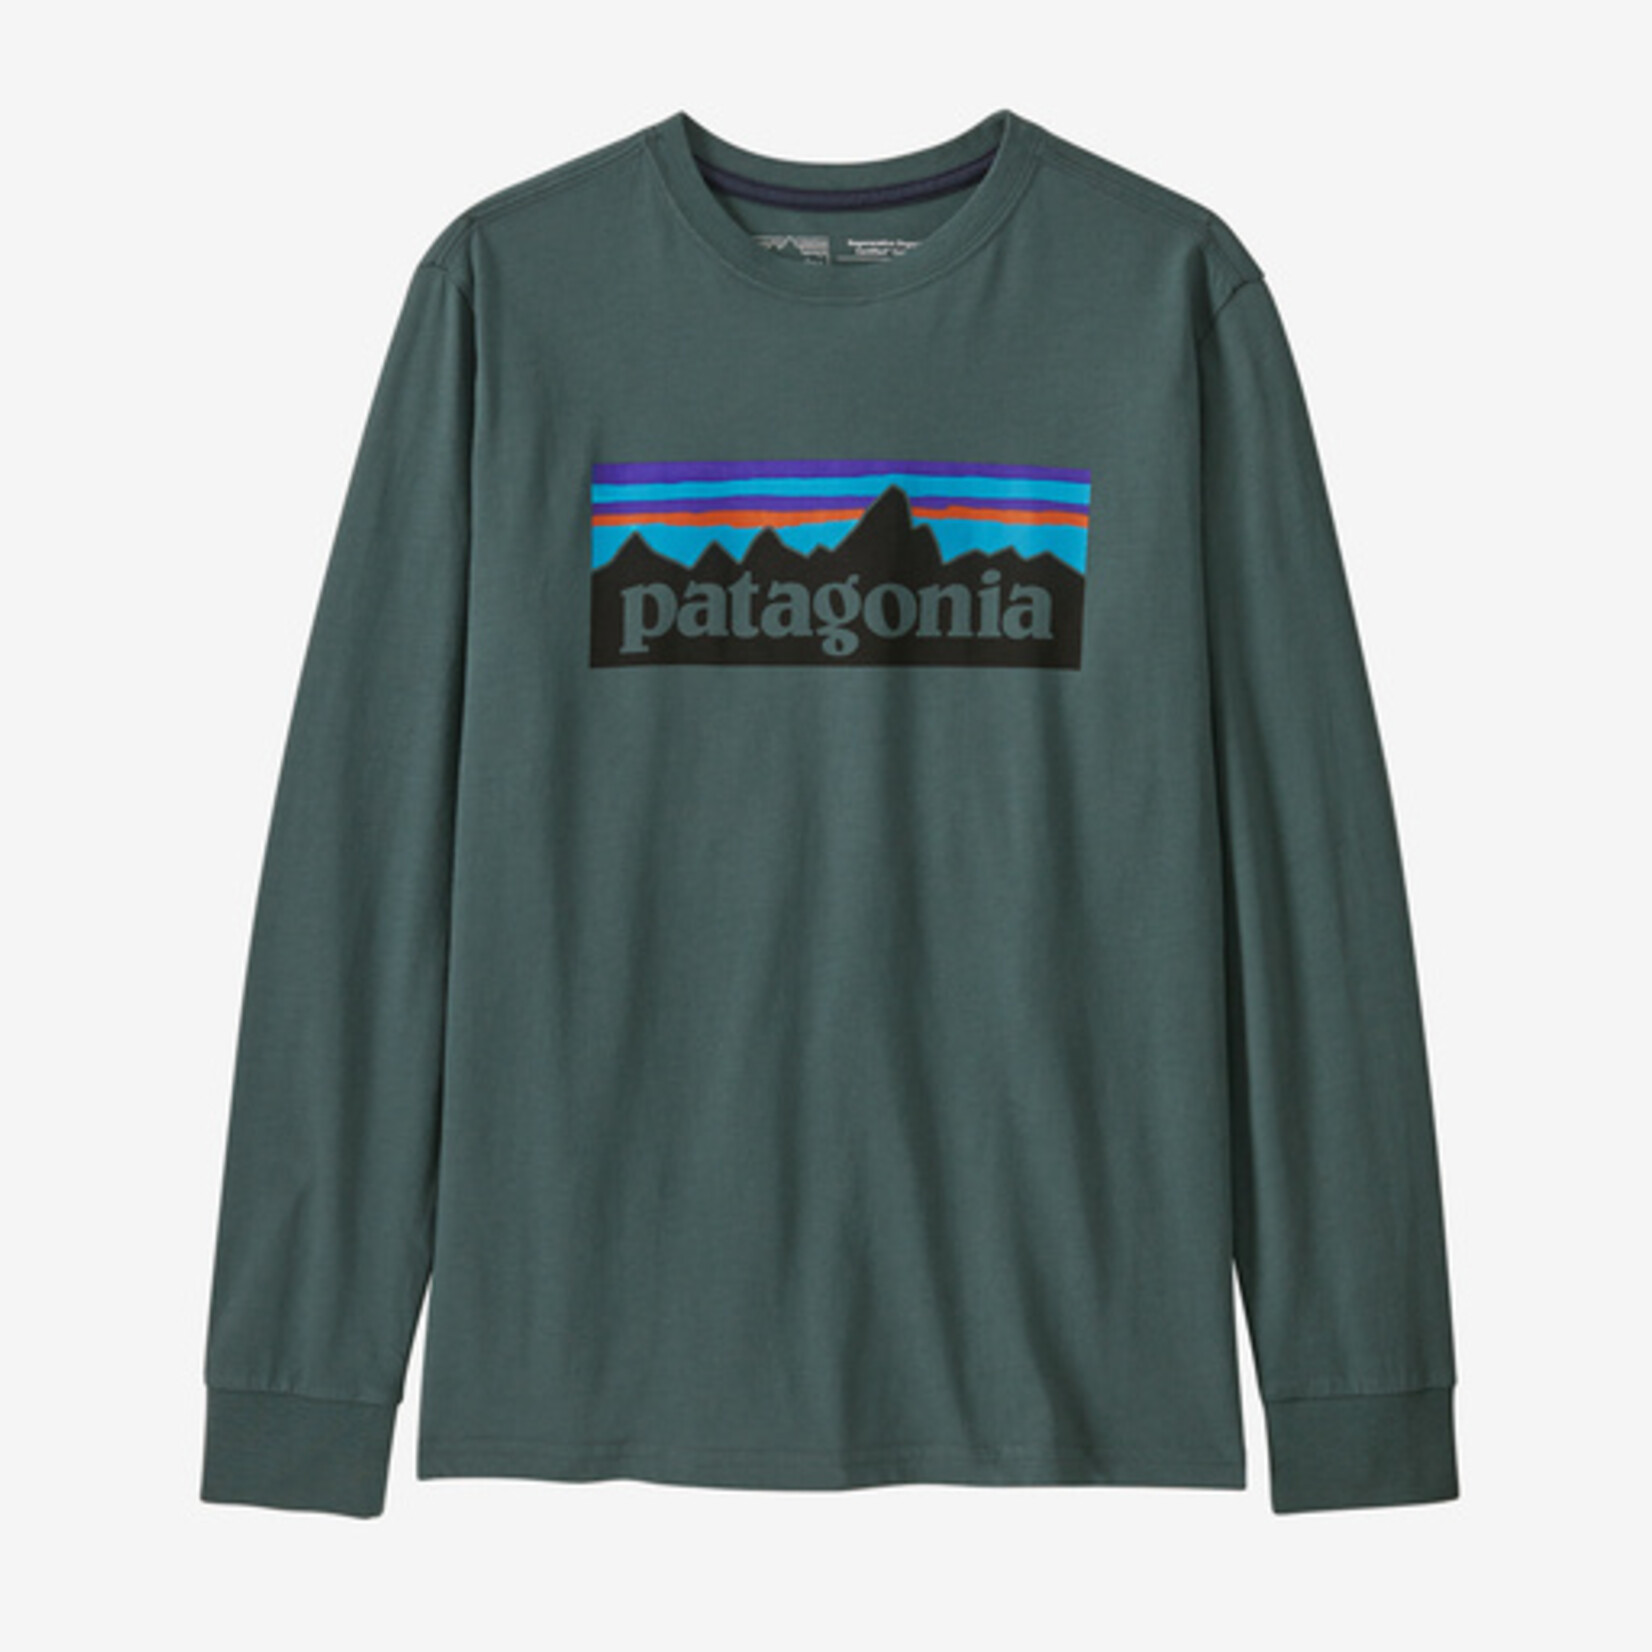 Patagonia K’s l/s regenerative tee